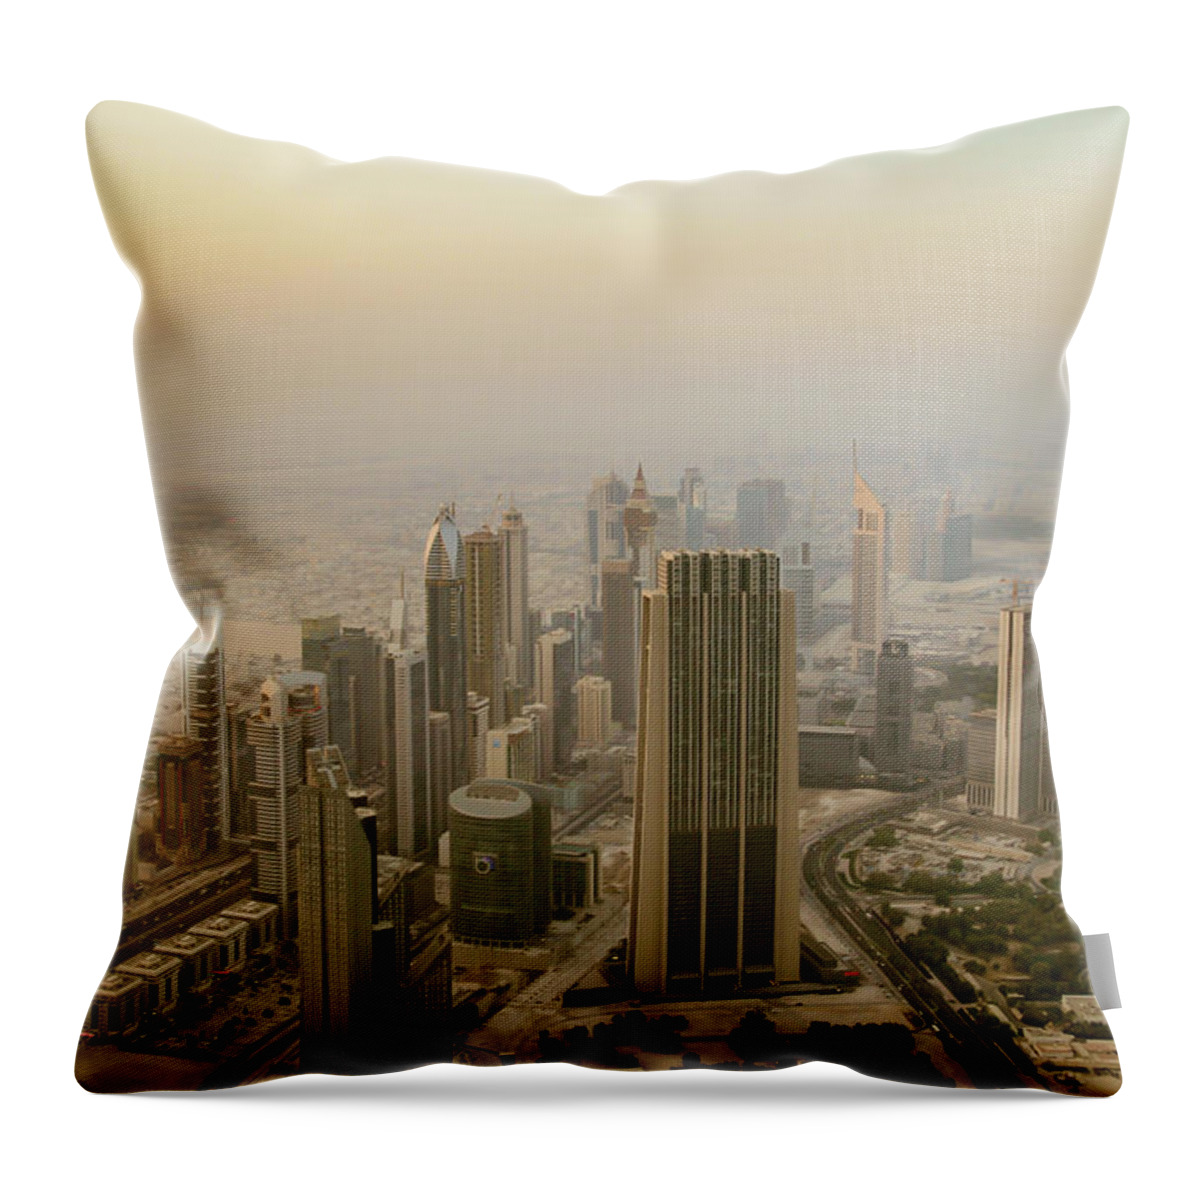 Dubai Throw Pillow featuring the photograph Dubai Skyline at Evening by Aashish Vaidya